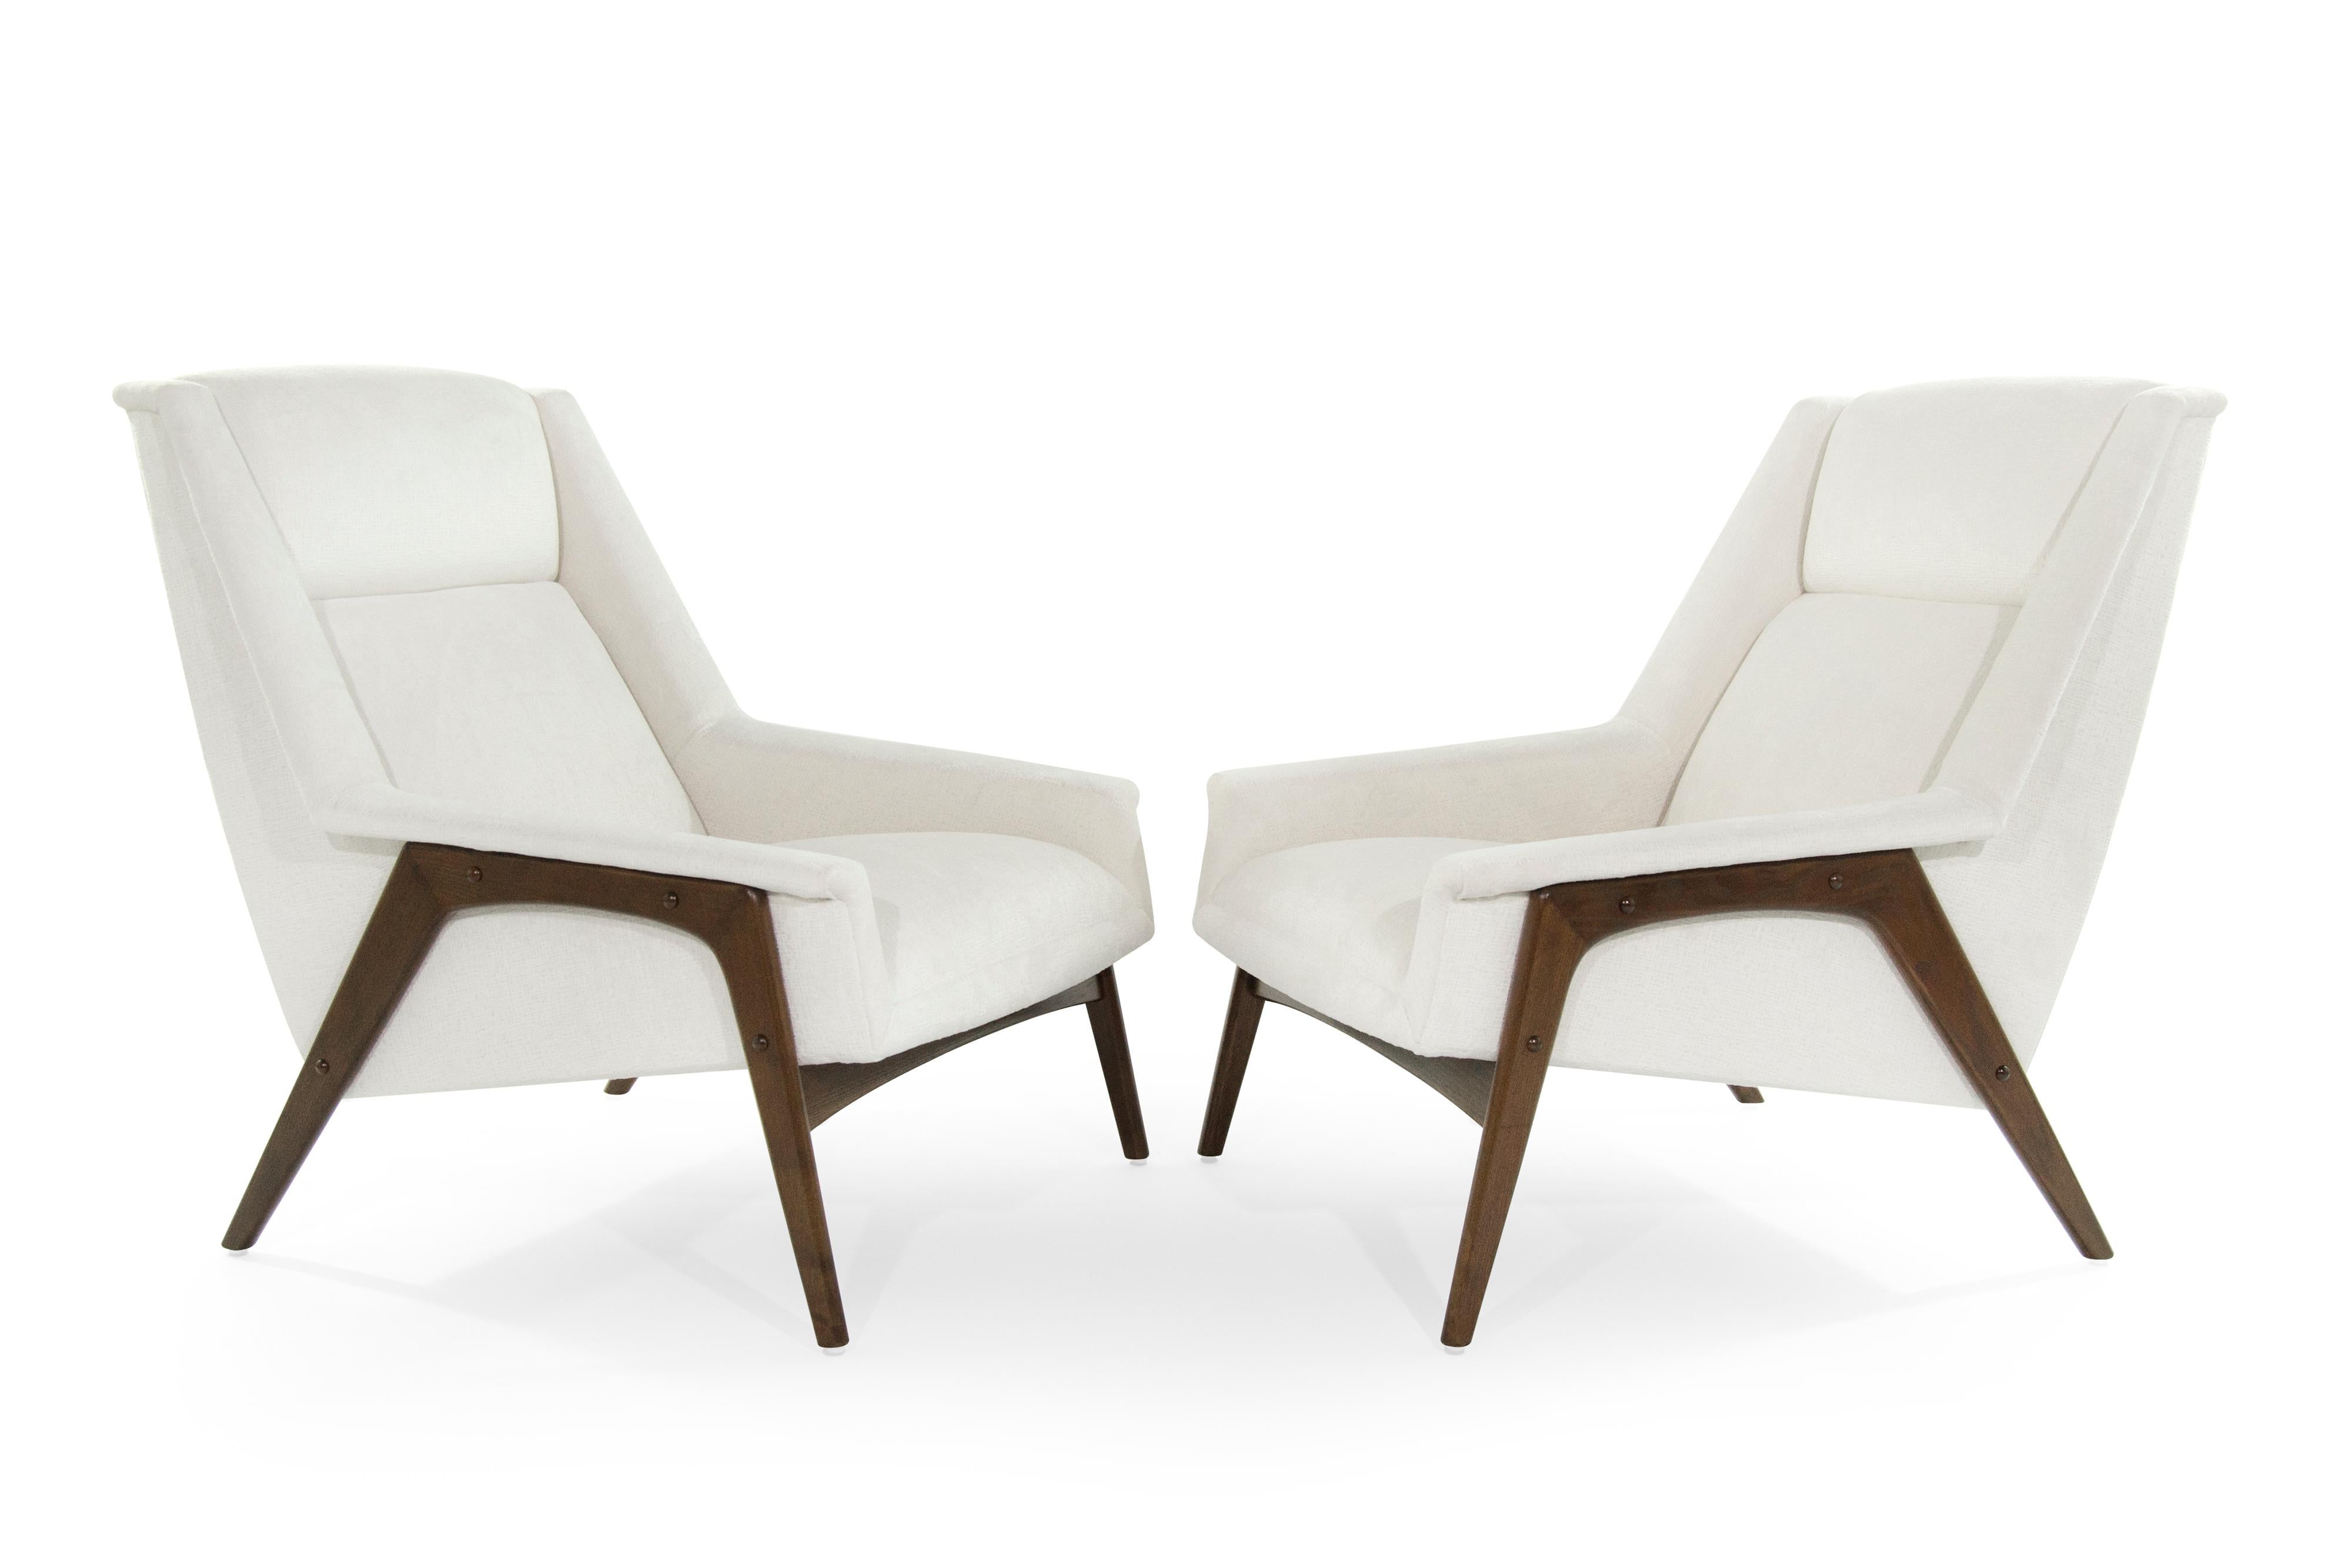 Scandinavian Modern Folke Ohlsson for DUX Lounge Chairs, Sweden, 1960s